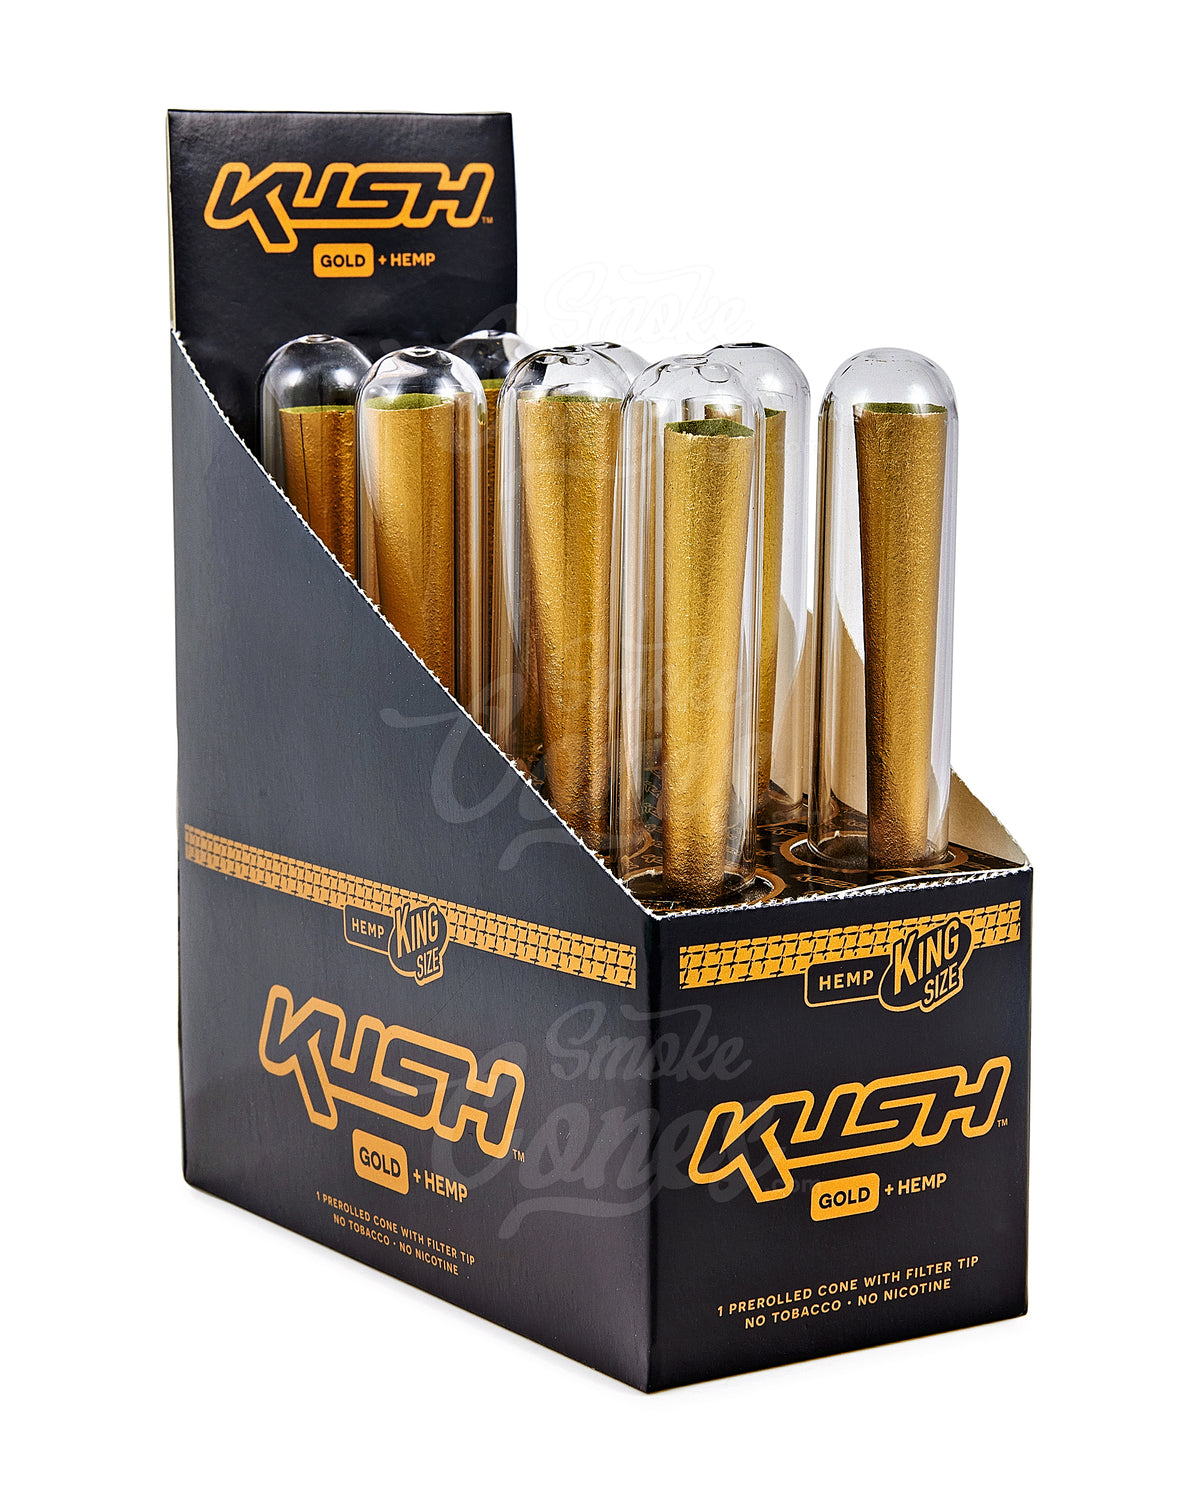 Kush 24K Gold Hemp King Size Pre Rolled Cones w/ Filter Tip 8/Box - 1